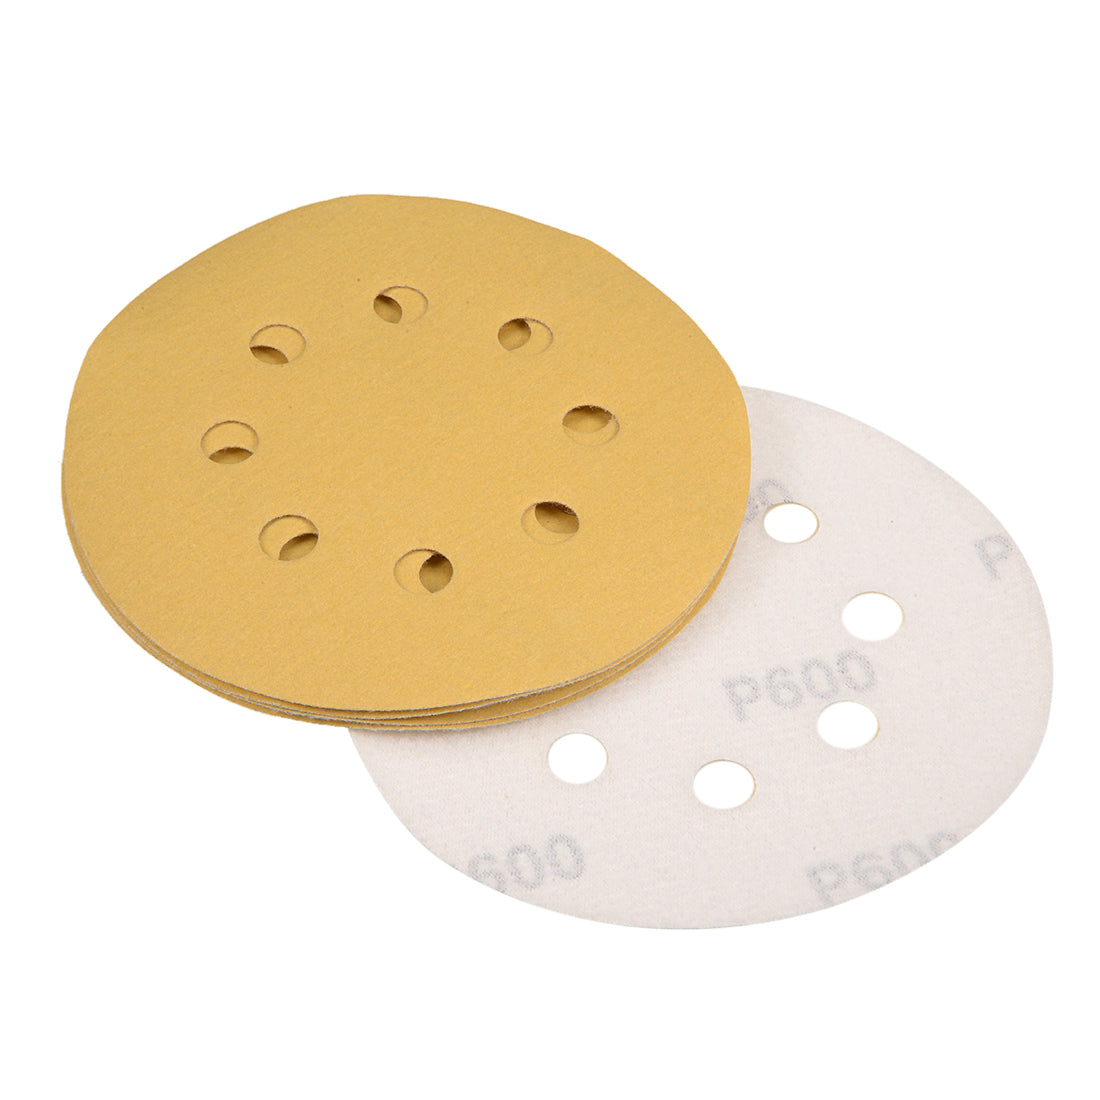 Uxcell Uxcell 5-inch Sanding Discs, 100-Grits 8-Holes Hook and Loop Wet Dry Flocking Sandpaper Sander Sand Paper for Random Orbital Sander 5pcs